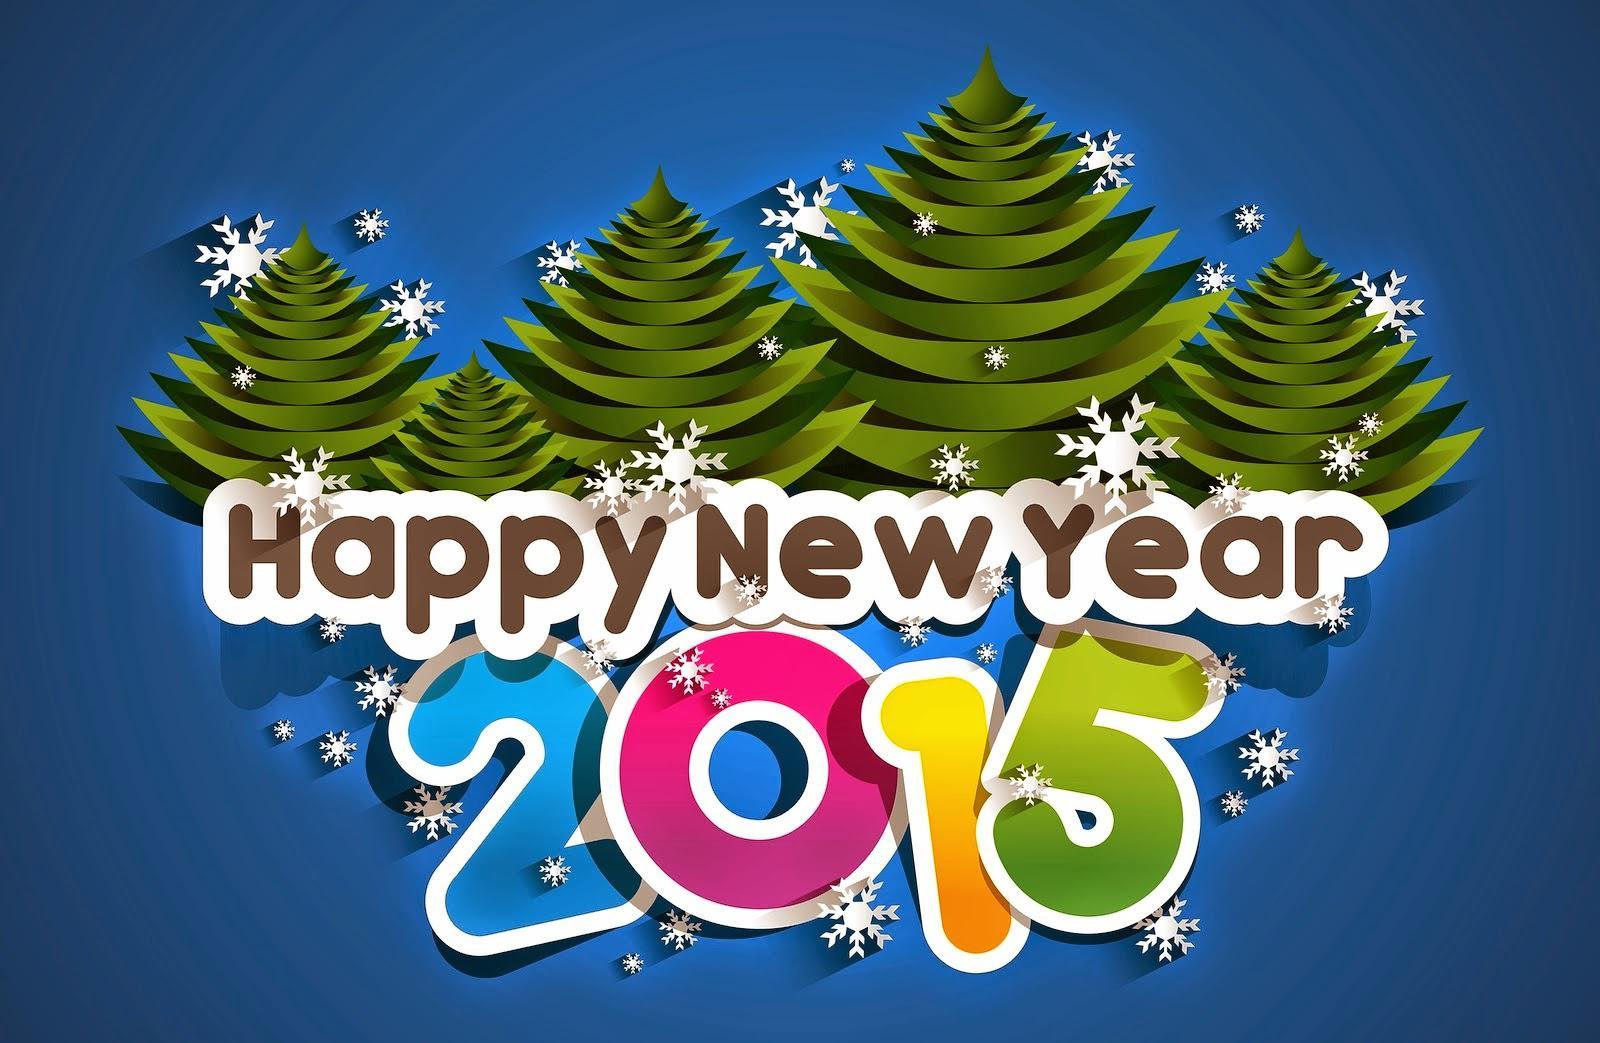 HD Wallpaper Happy New Year 2015 Image Pics Pc Wallpaper New Year